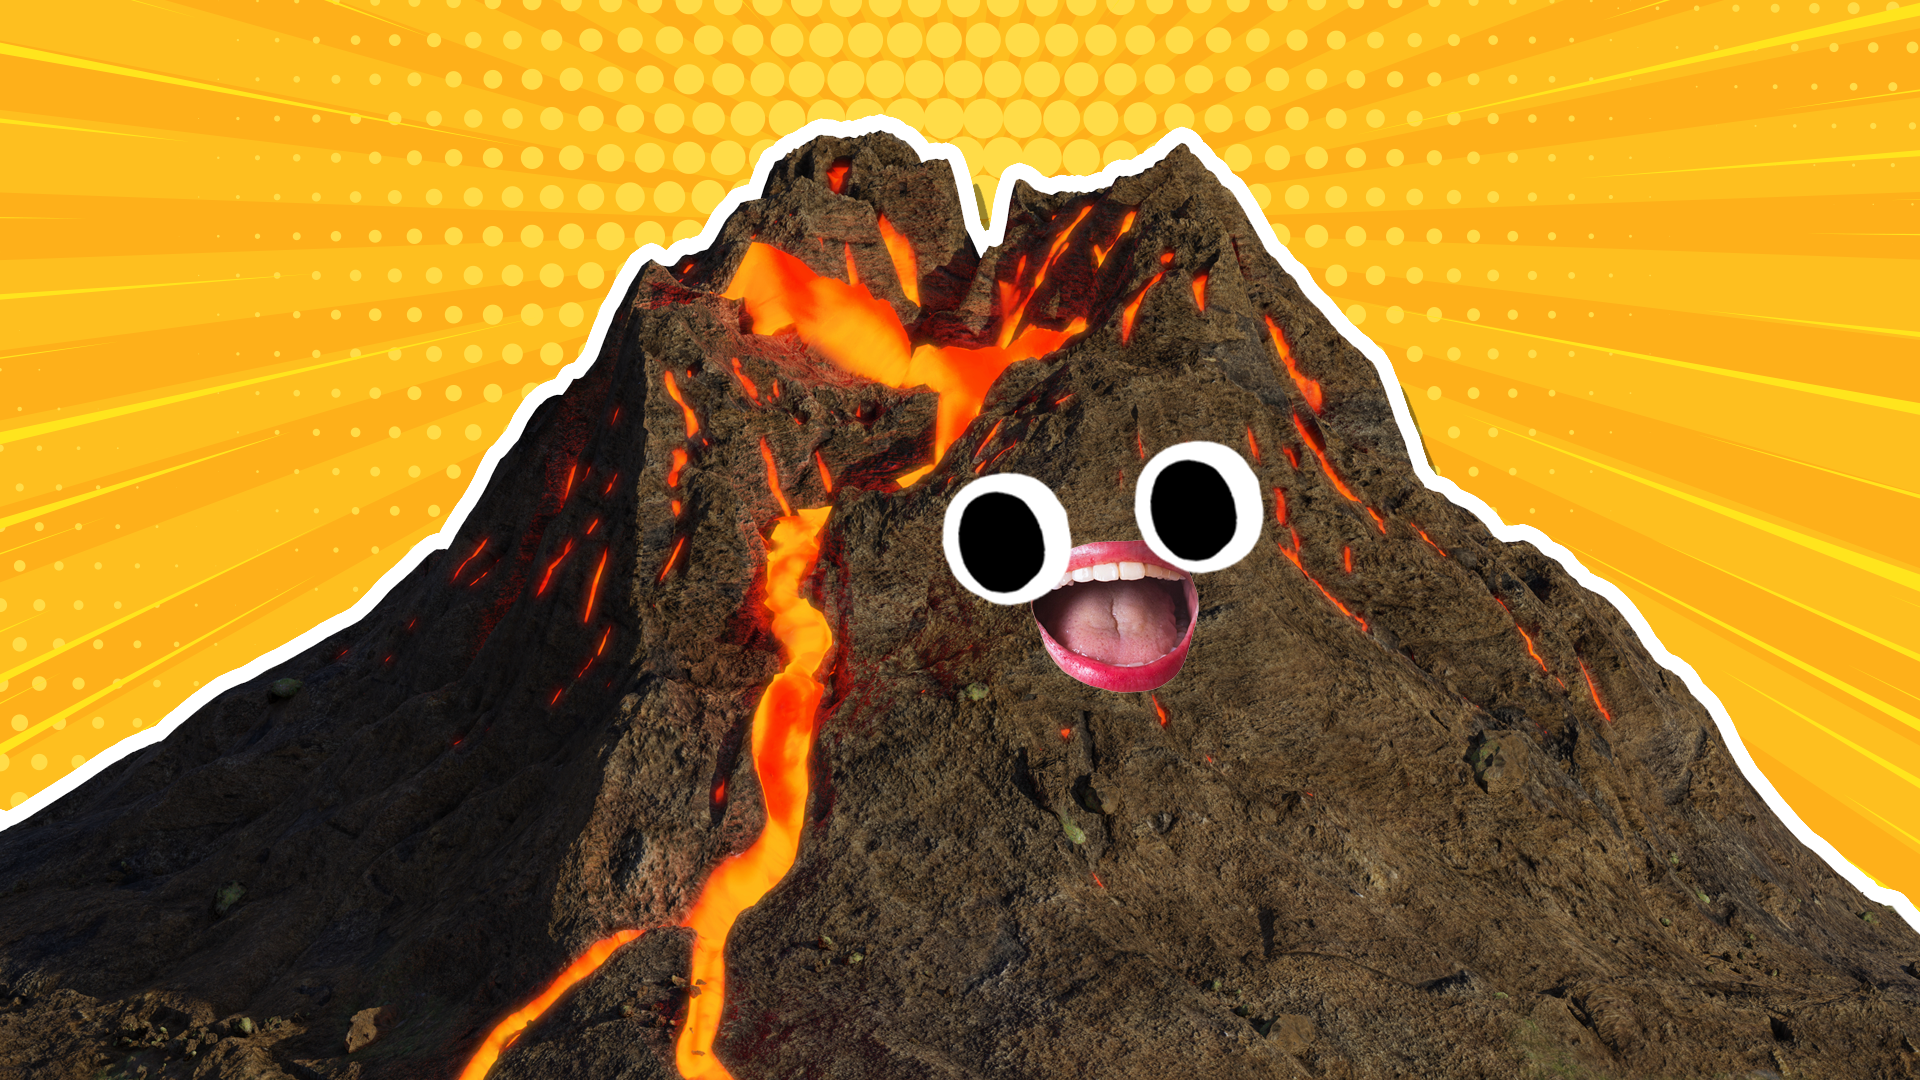 Volcano jokes